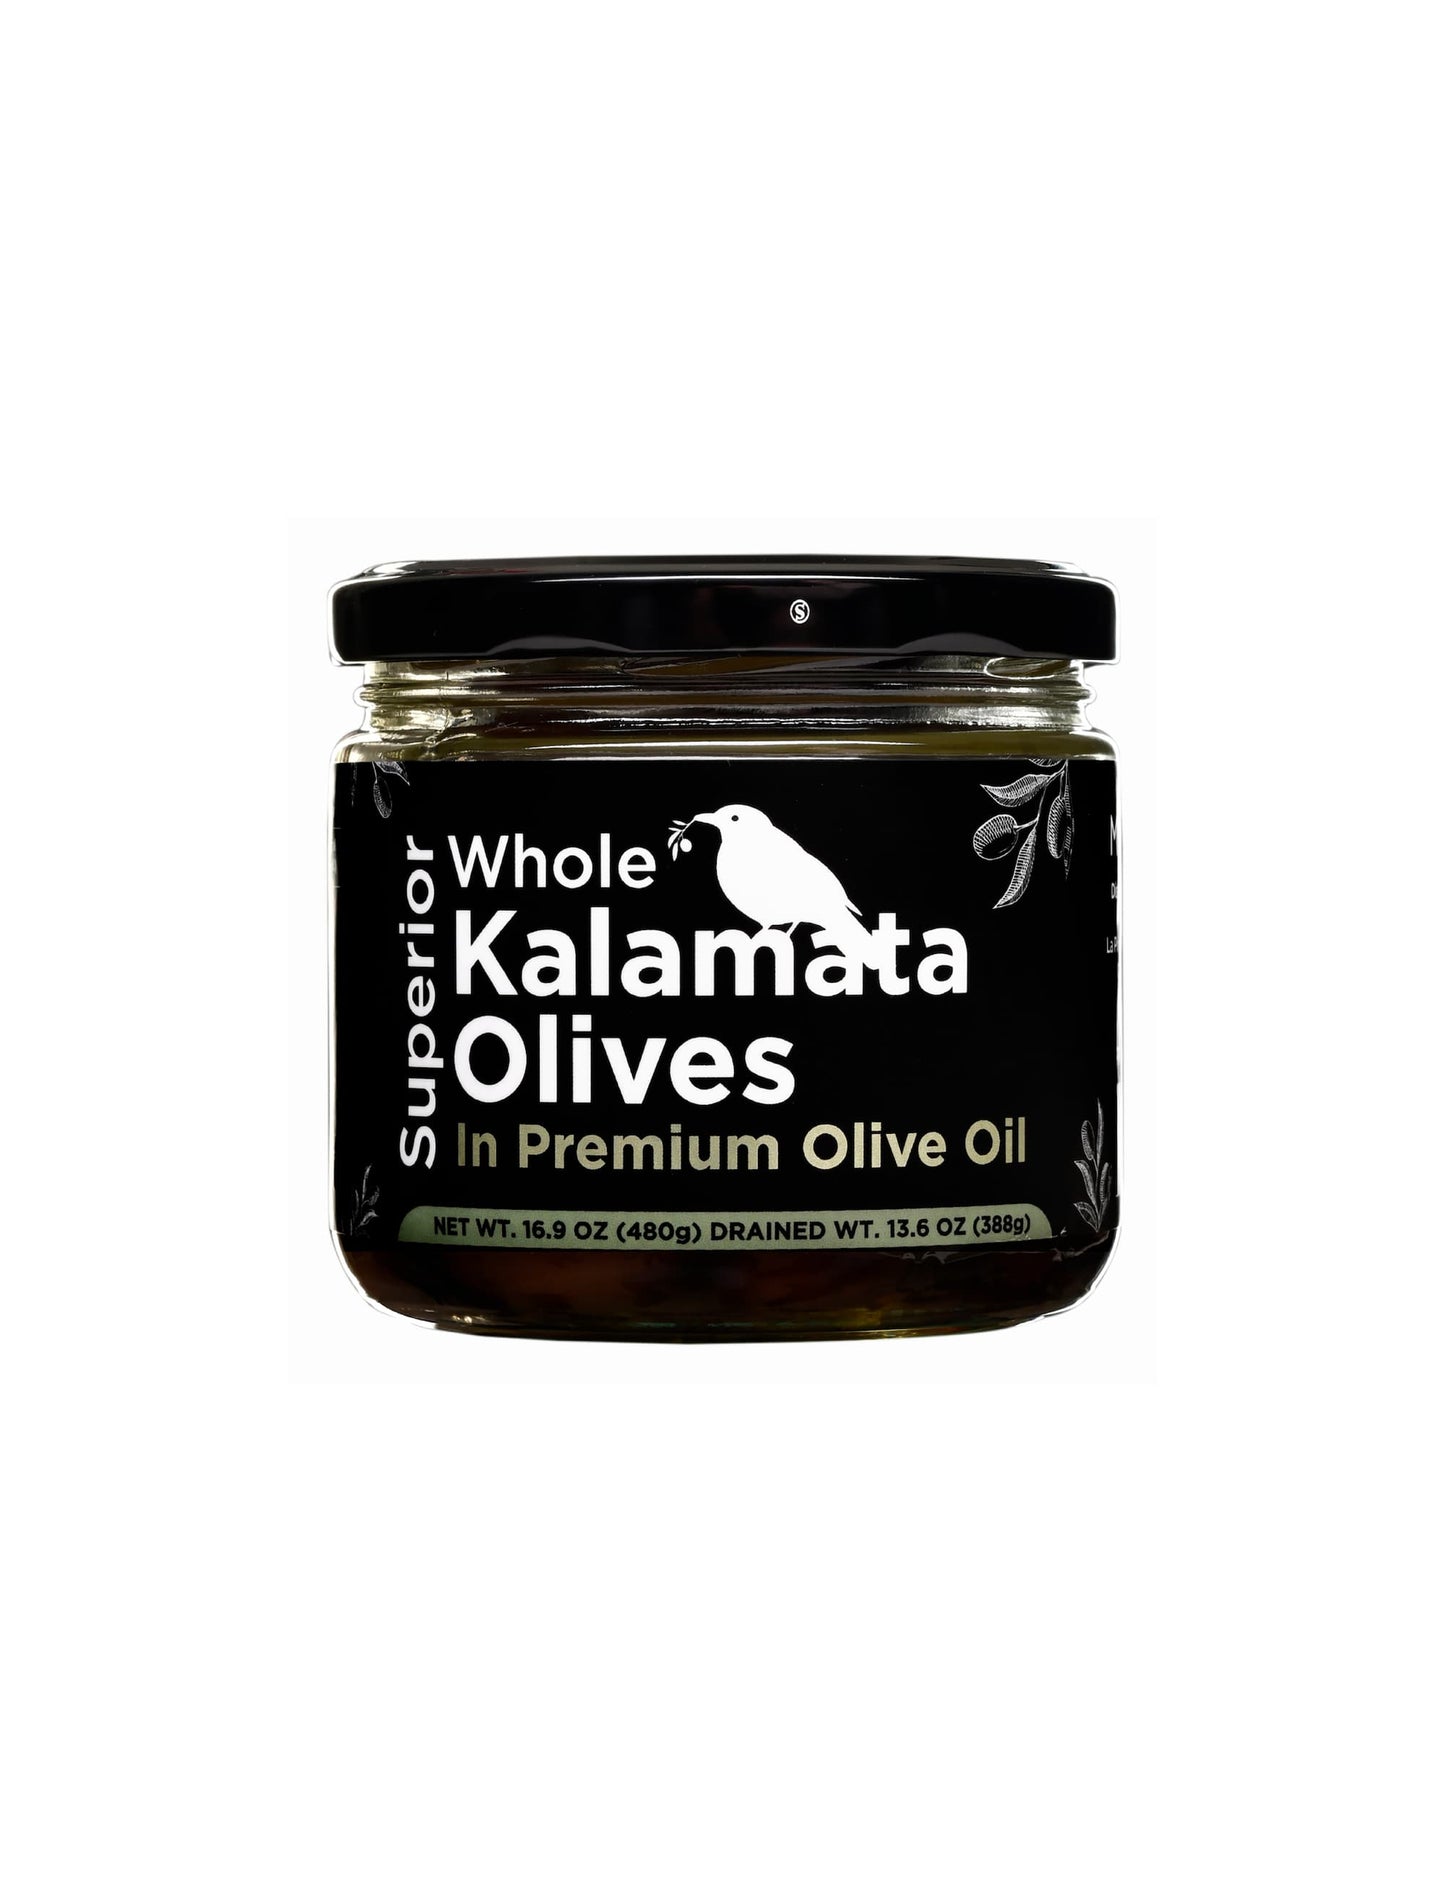 Whole Jumbo Kalamata Olives in Premium Olive Oil 13.6 OZ (480g)